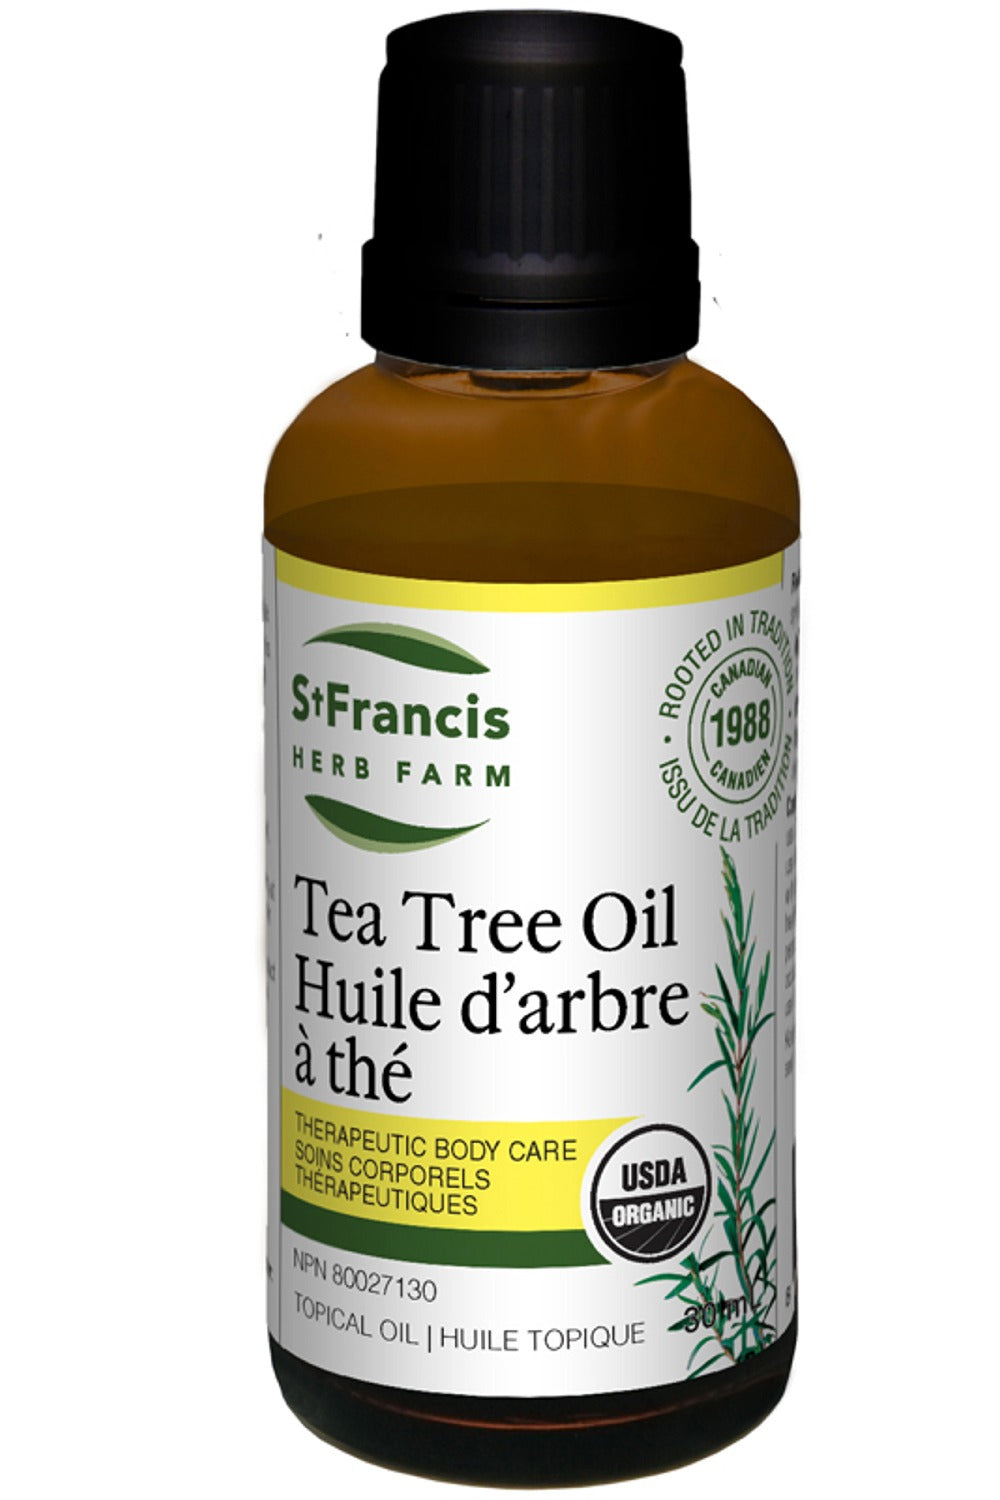 ST FRANCIS HERB FARM Tea Tree Oil (100 ml)